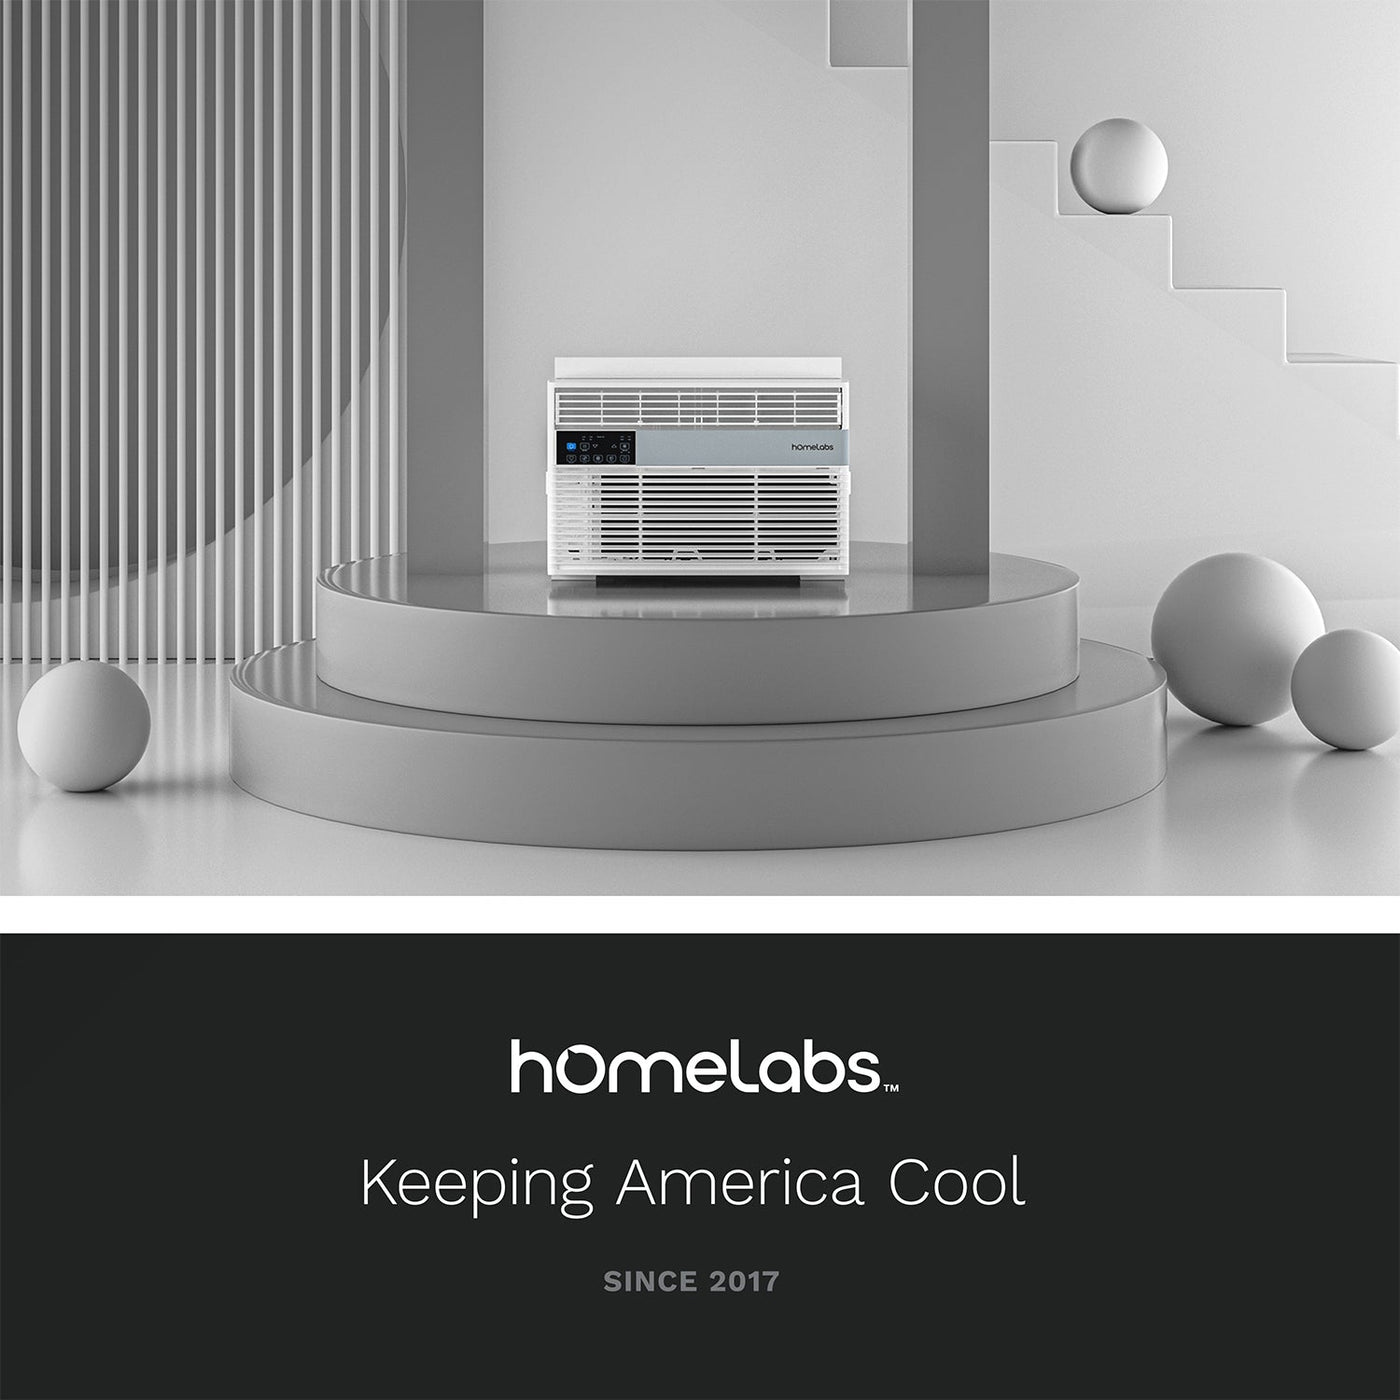 hOmeLabs | 8,000 BTU Wi-Fi Energy Efficient Window Air Conditioner